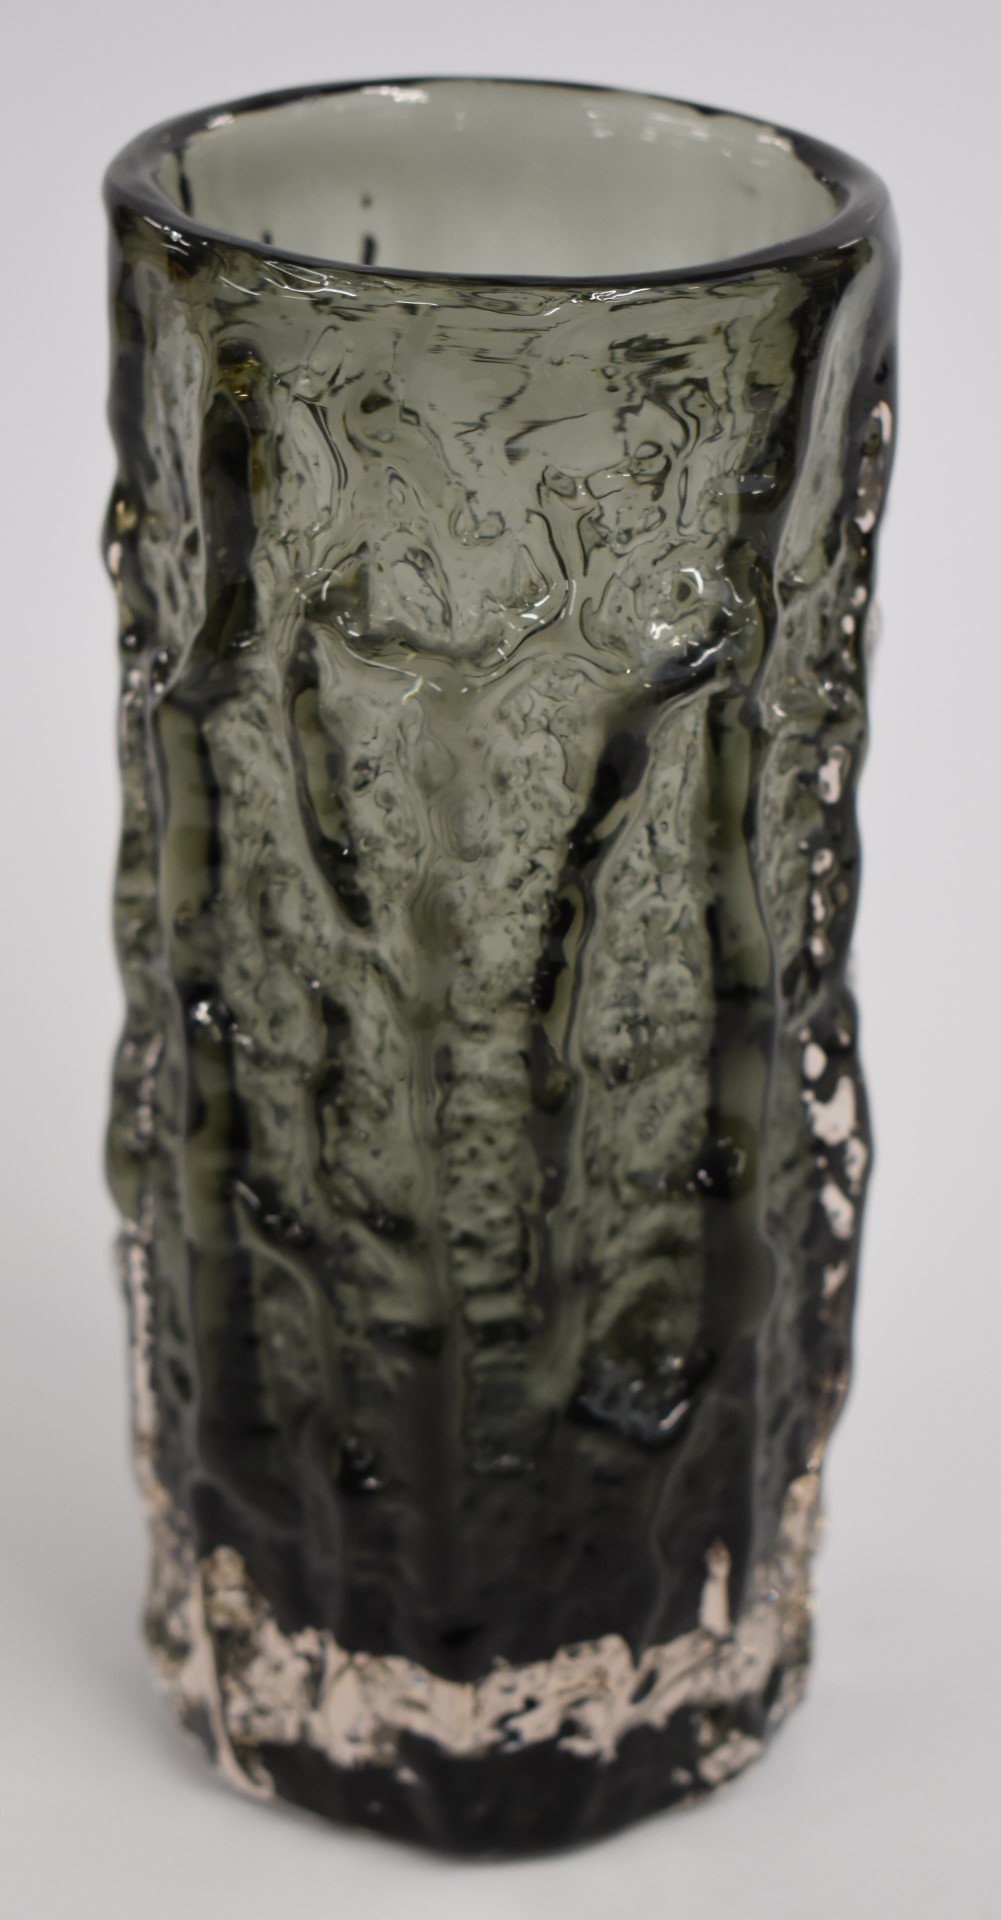 Geoffrey Baxter for Whitefriars textured bark sleeve vase in smoke grey, 23cm tall.